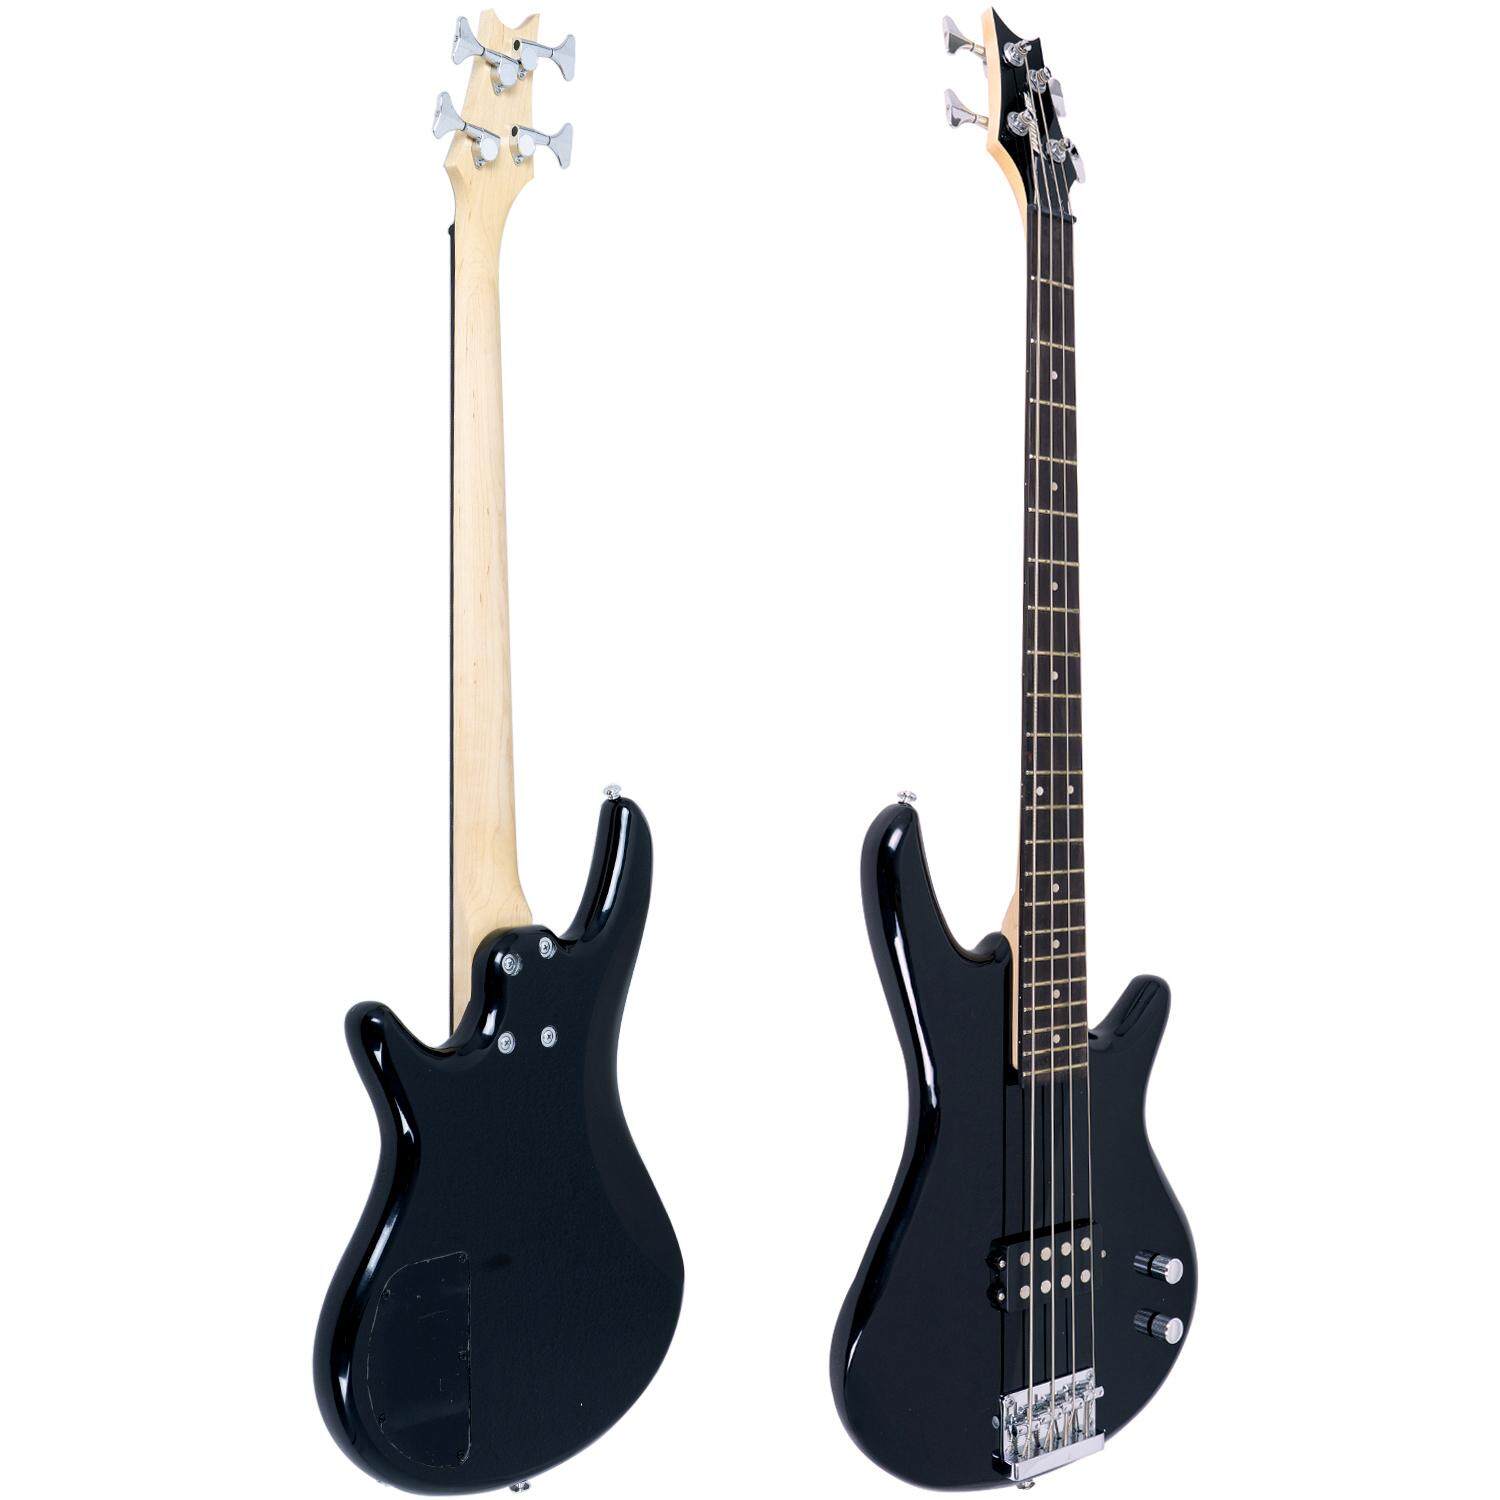 Proline PB100 Bass Guitar กีตาร์เบสไฟฟ้า 4 สาย 22 เฟร็ต แบบ Humbucking (Black Joy Color)